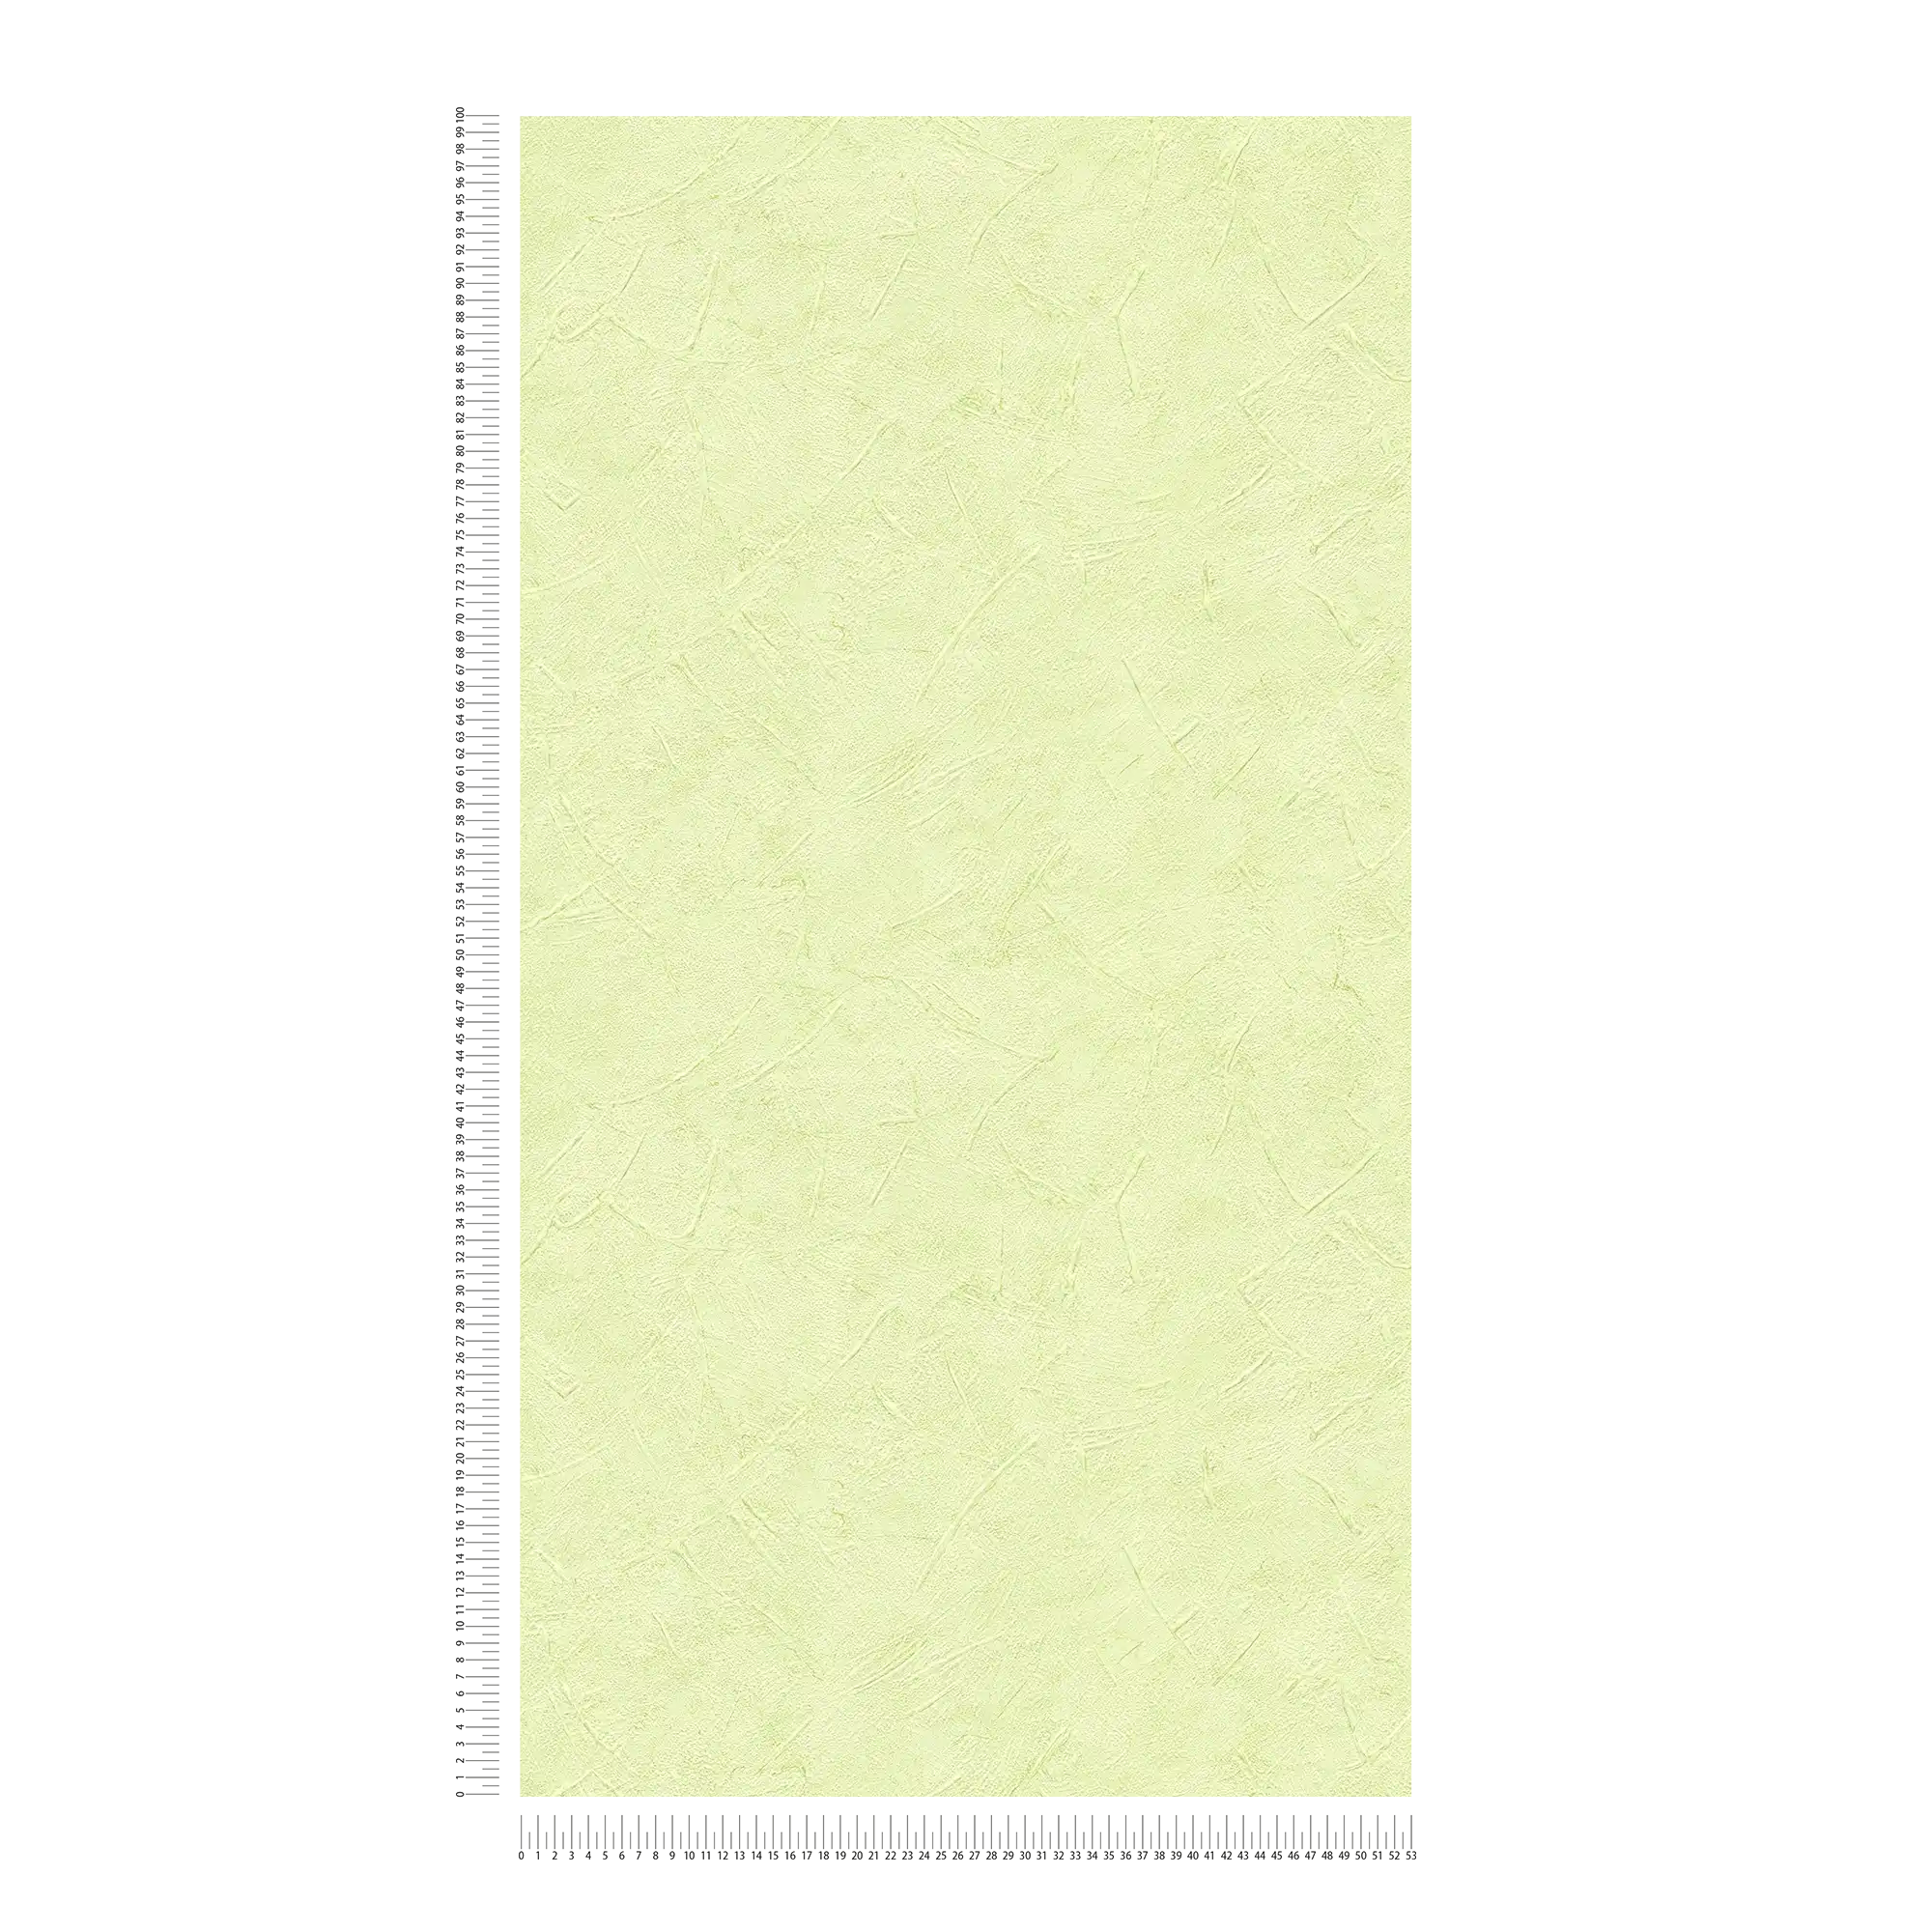             Troffel pleisterpapier behang lichtgroen met pleisteroptiek - groen
        